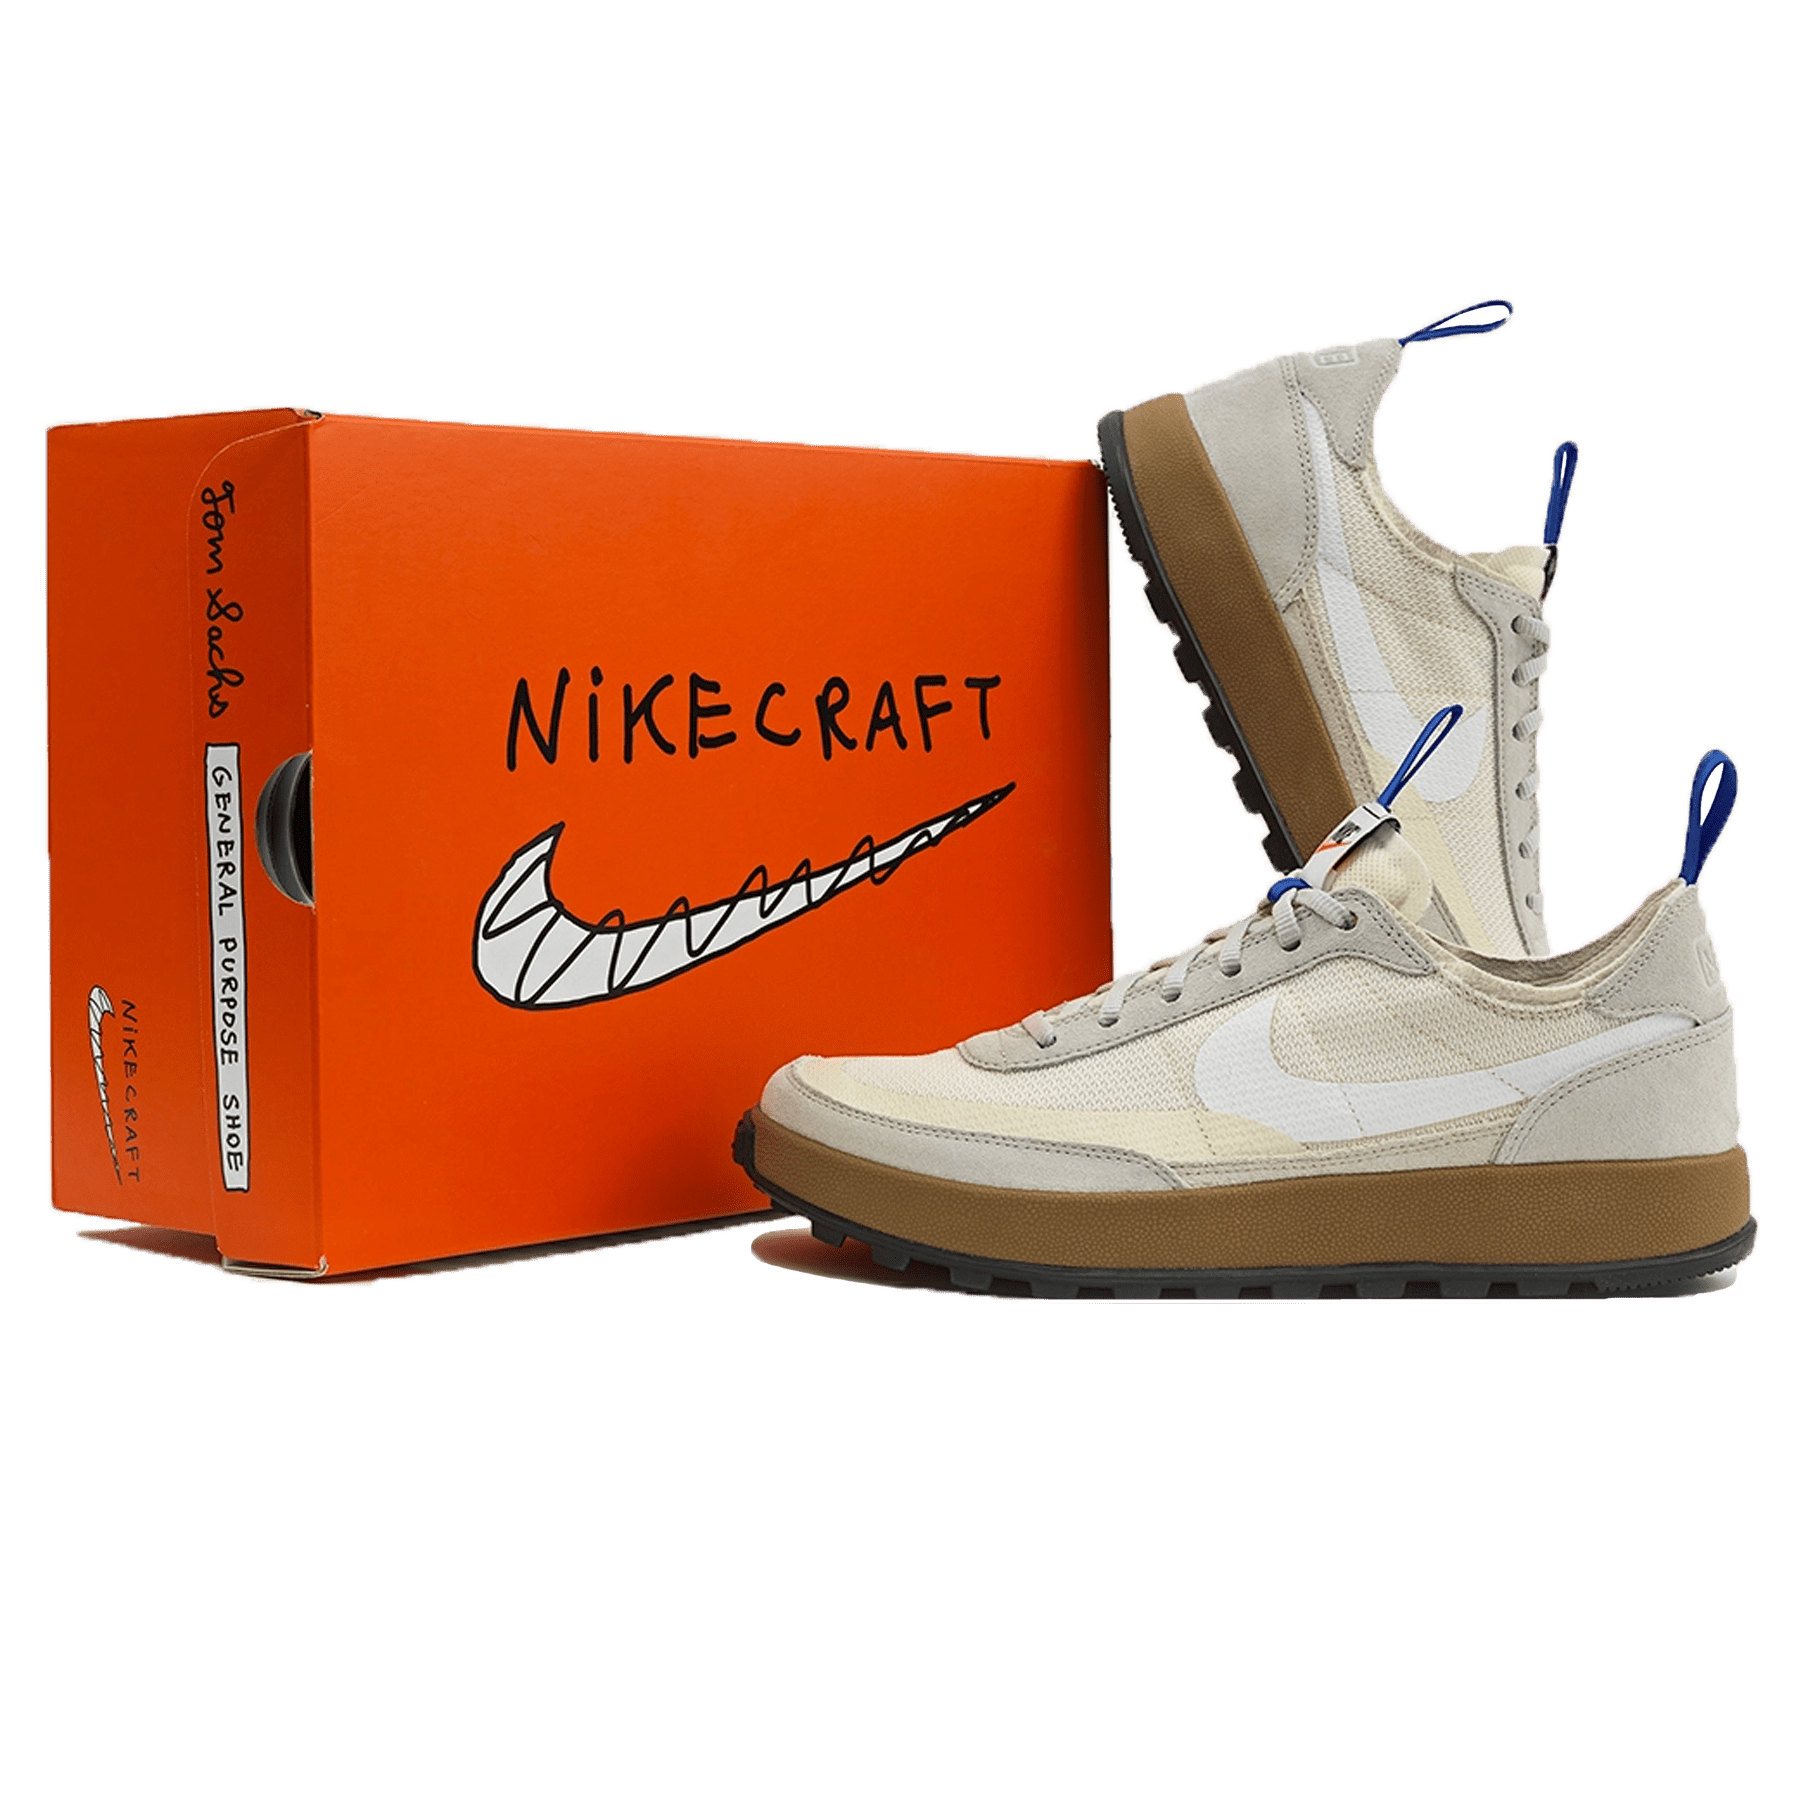 再入荷定番Tom Sachs NikeCraft WMNS General Purpose 靴